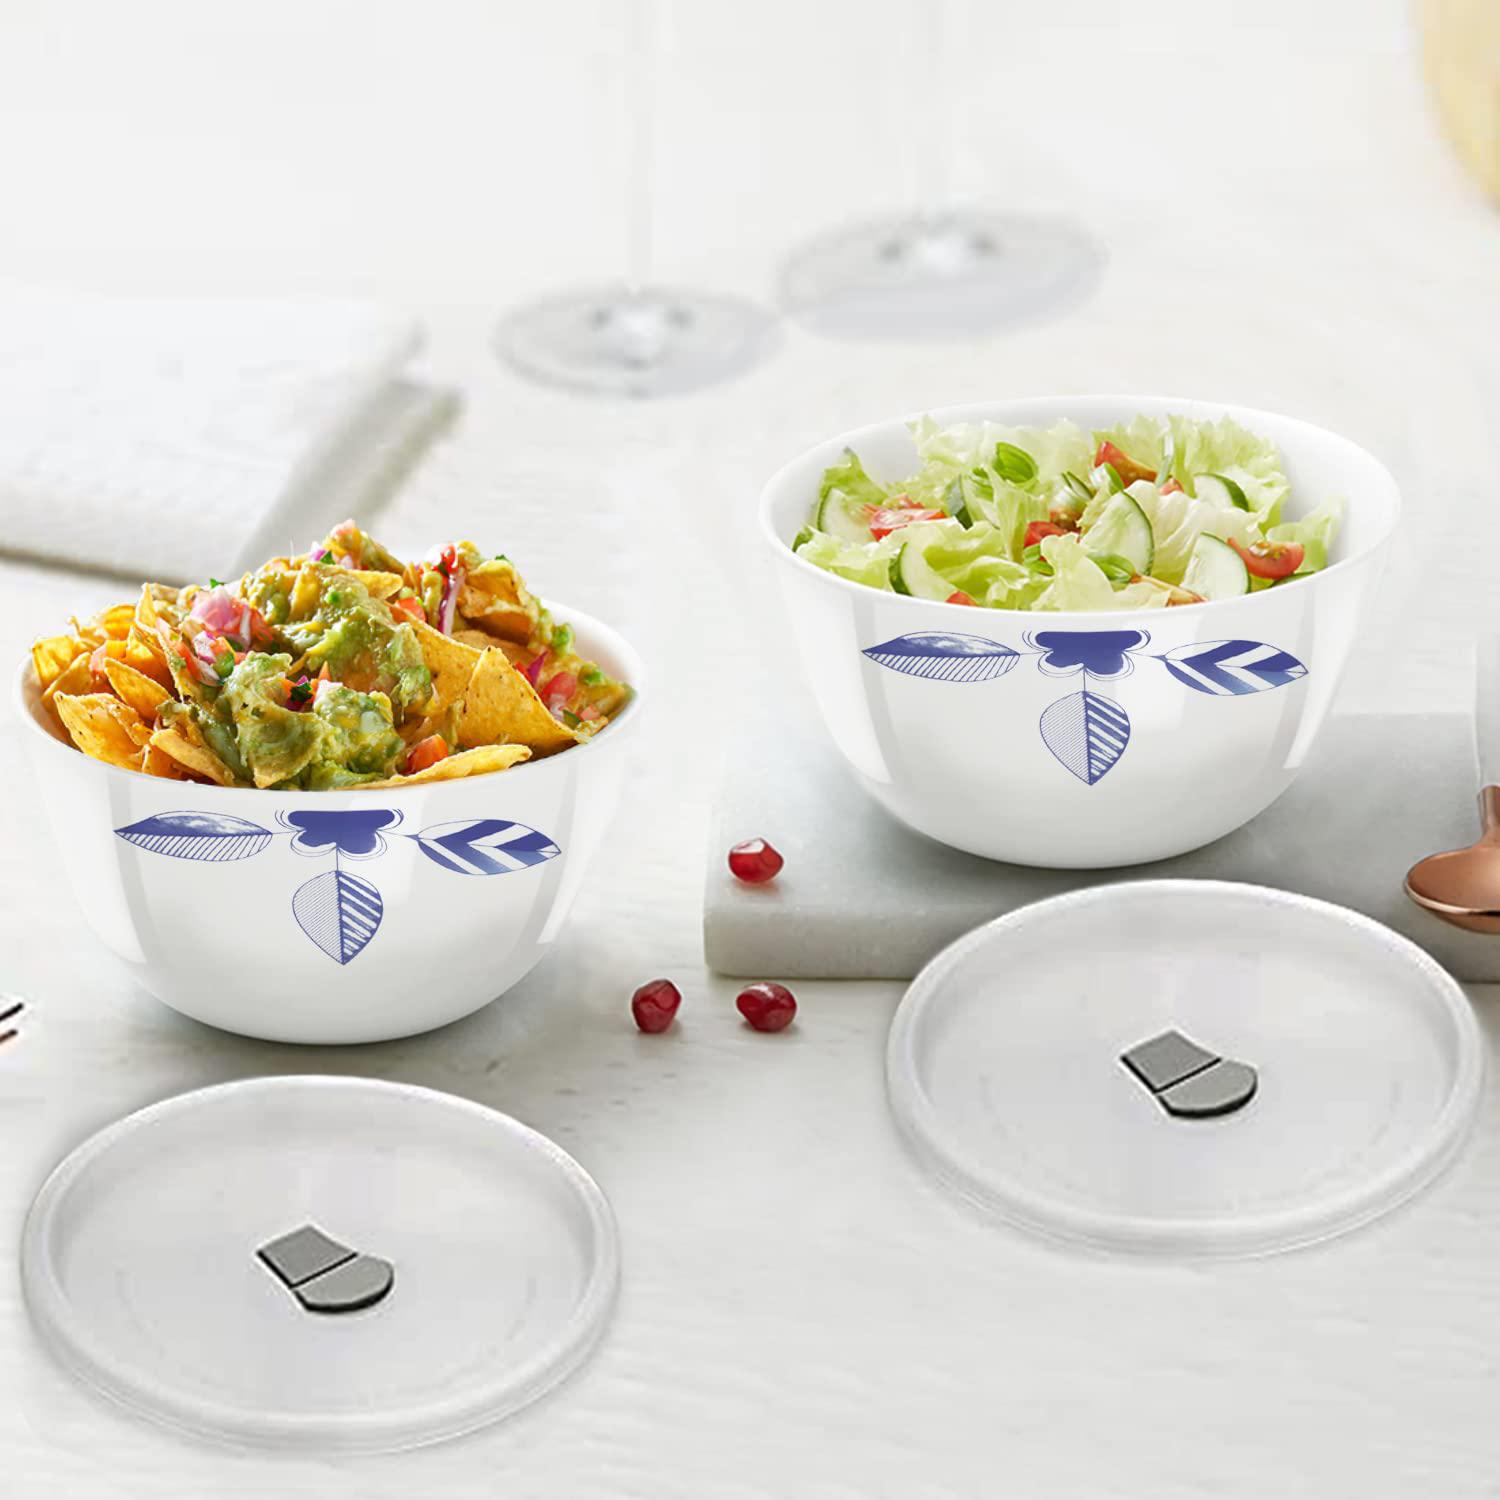 Larah by BOROSIL borosil serving bowls for entertaining, set of 2, 24 oz,  lightweight ceramic bowls